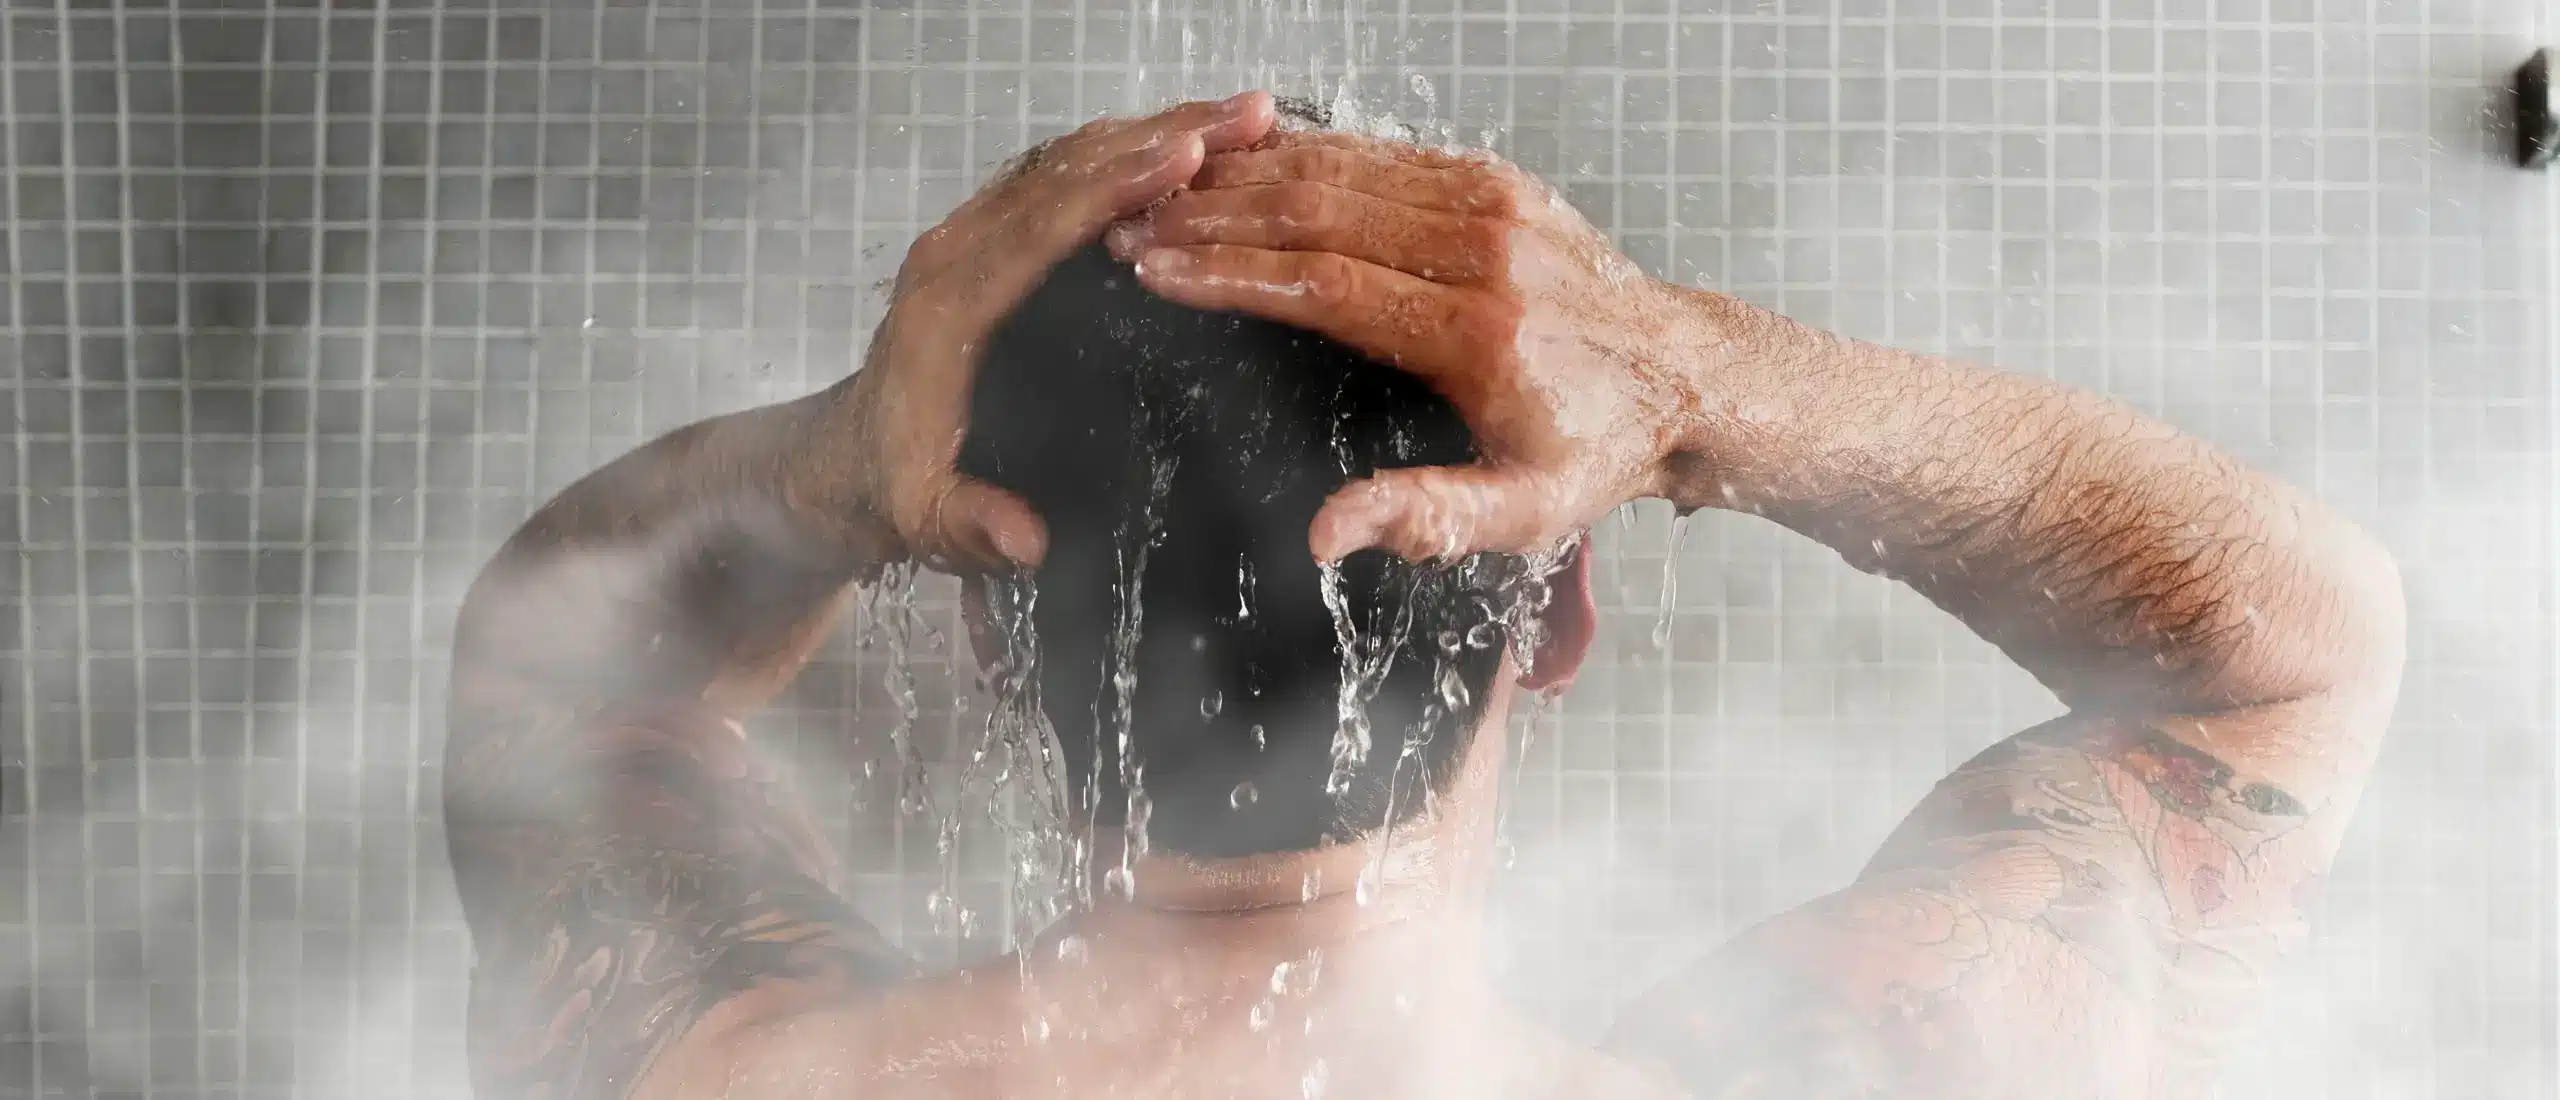 Man taking a hot shower